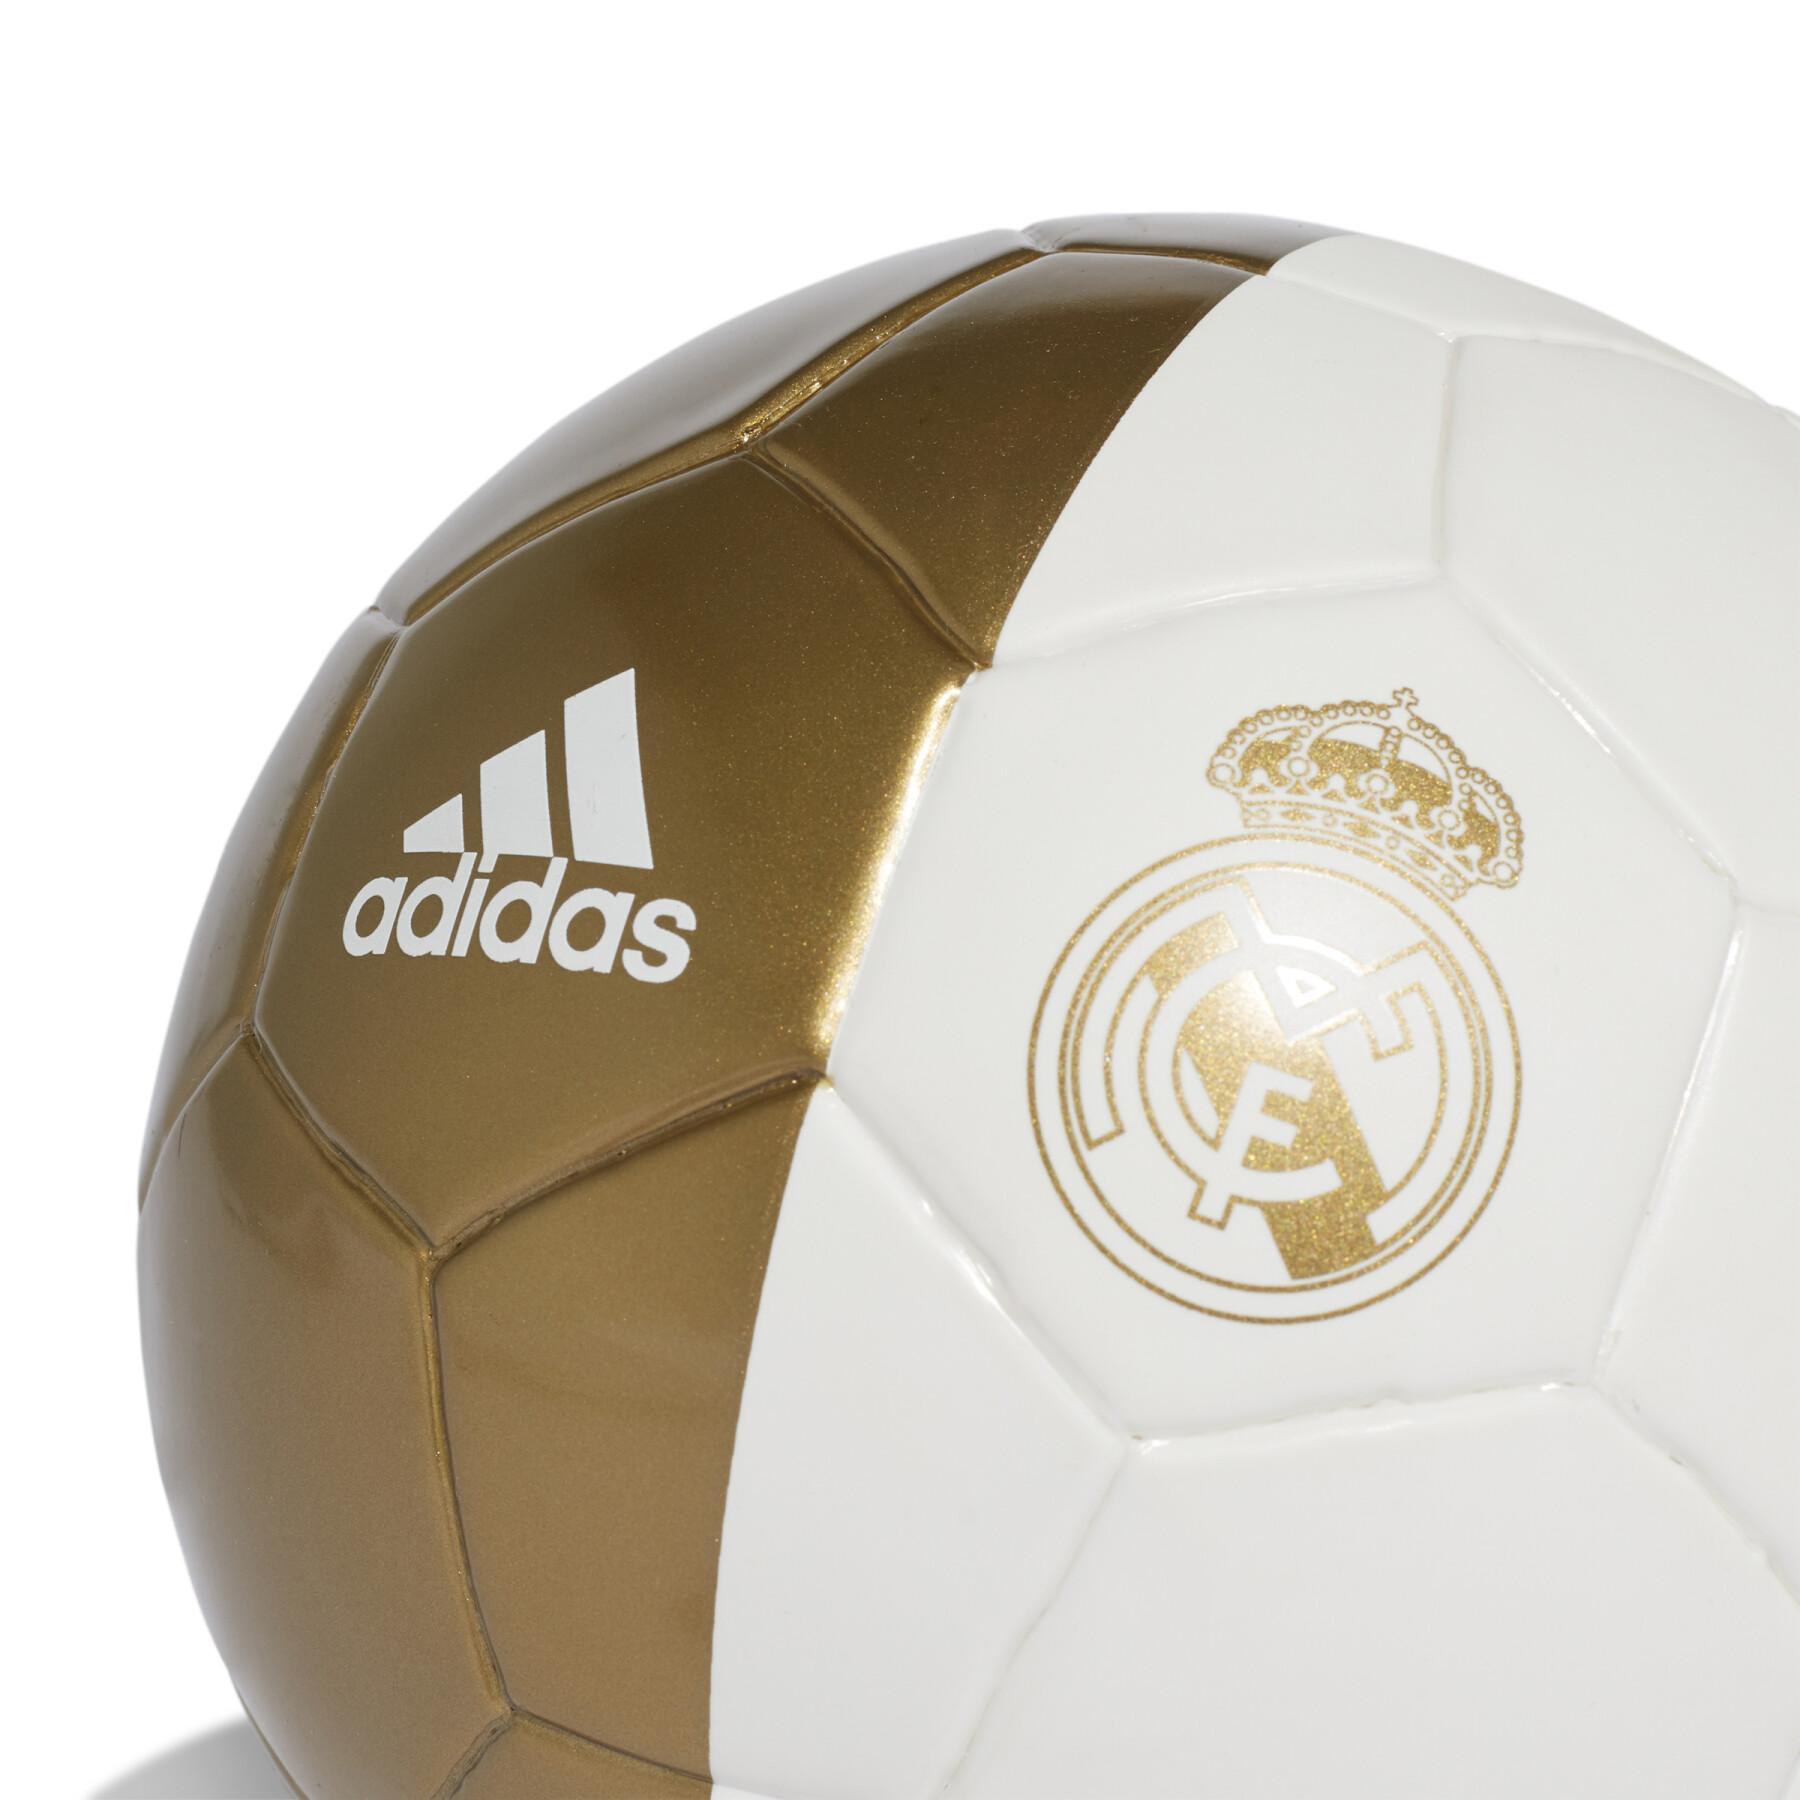 Mini ball Real Madrid